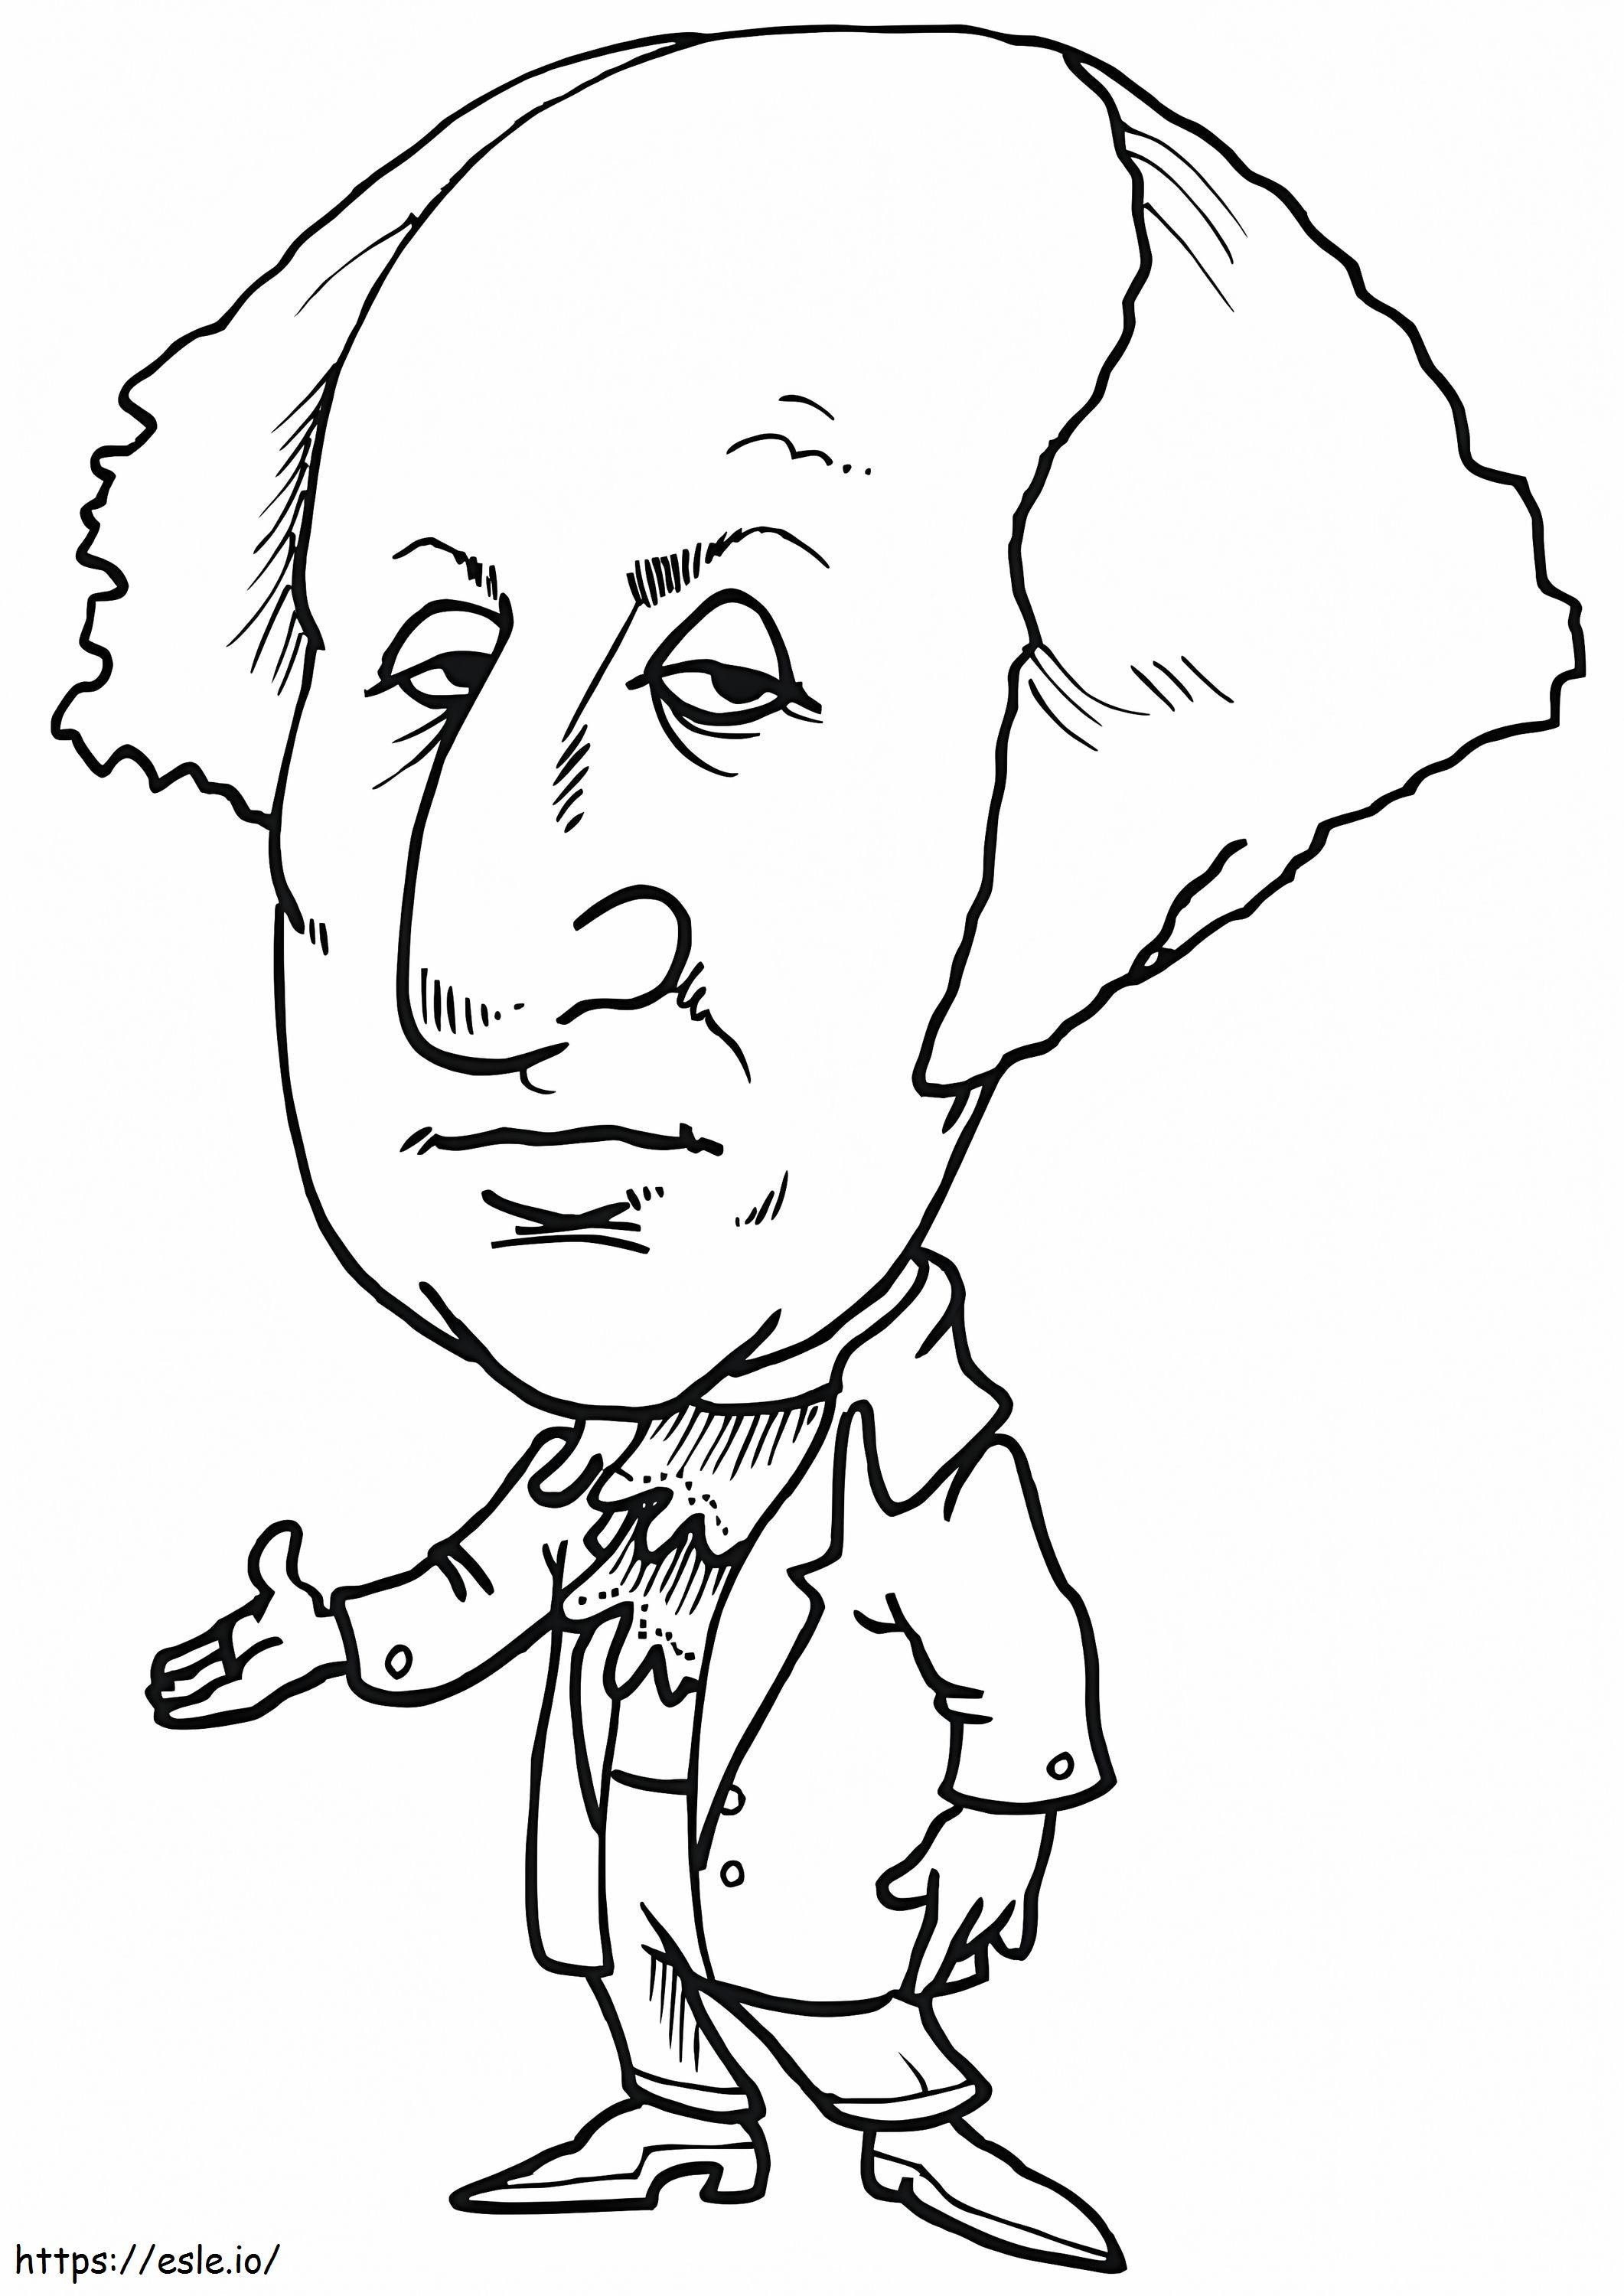 George Washington Karikatürü boyama